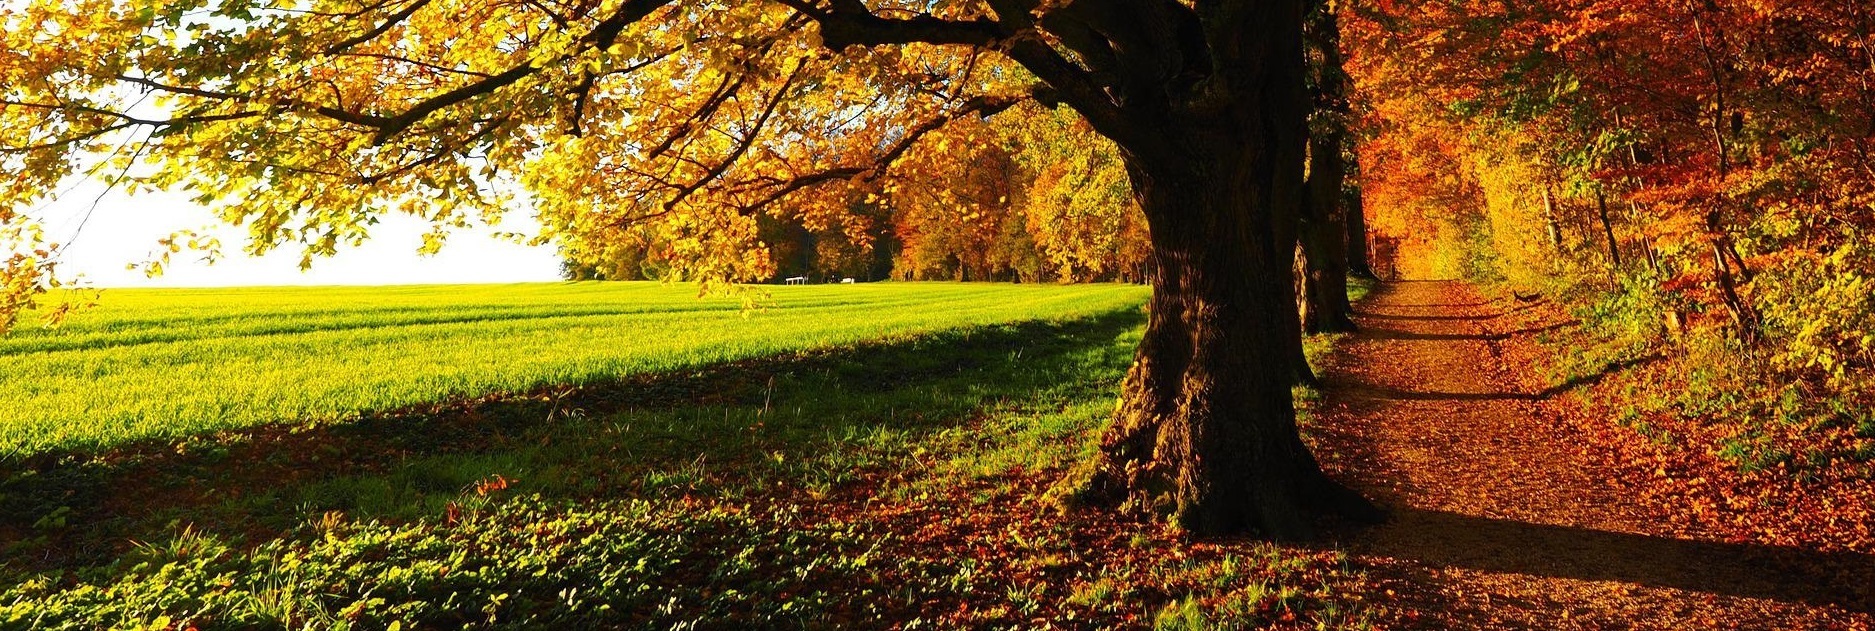  Herbst_Baum.jpg